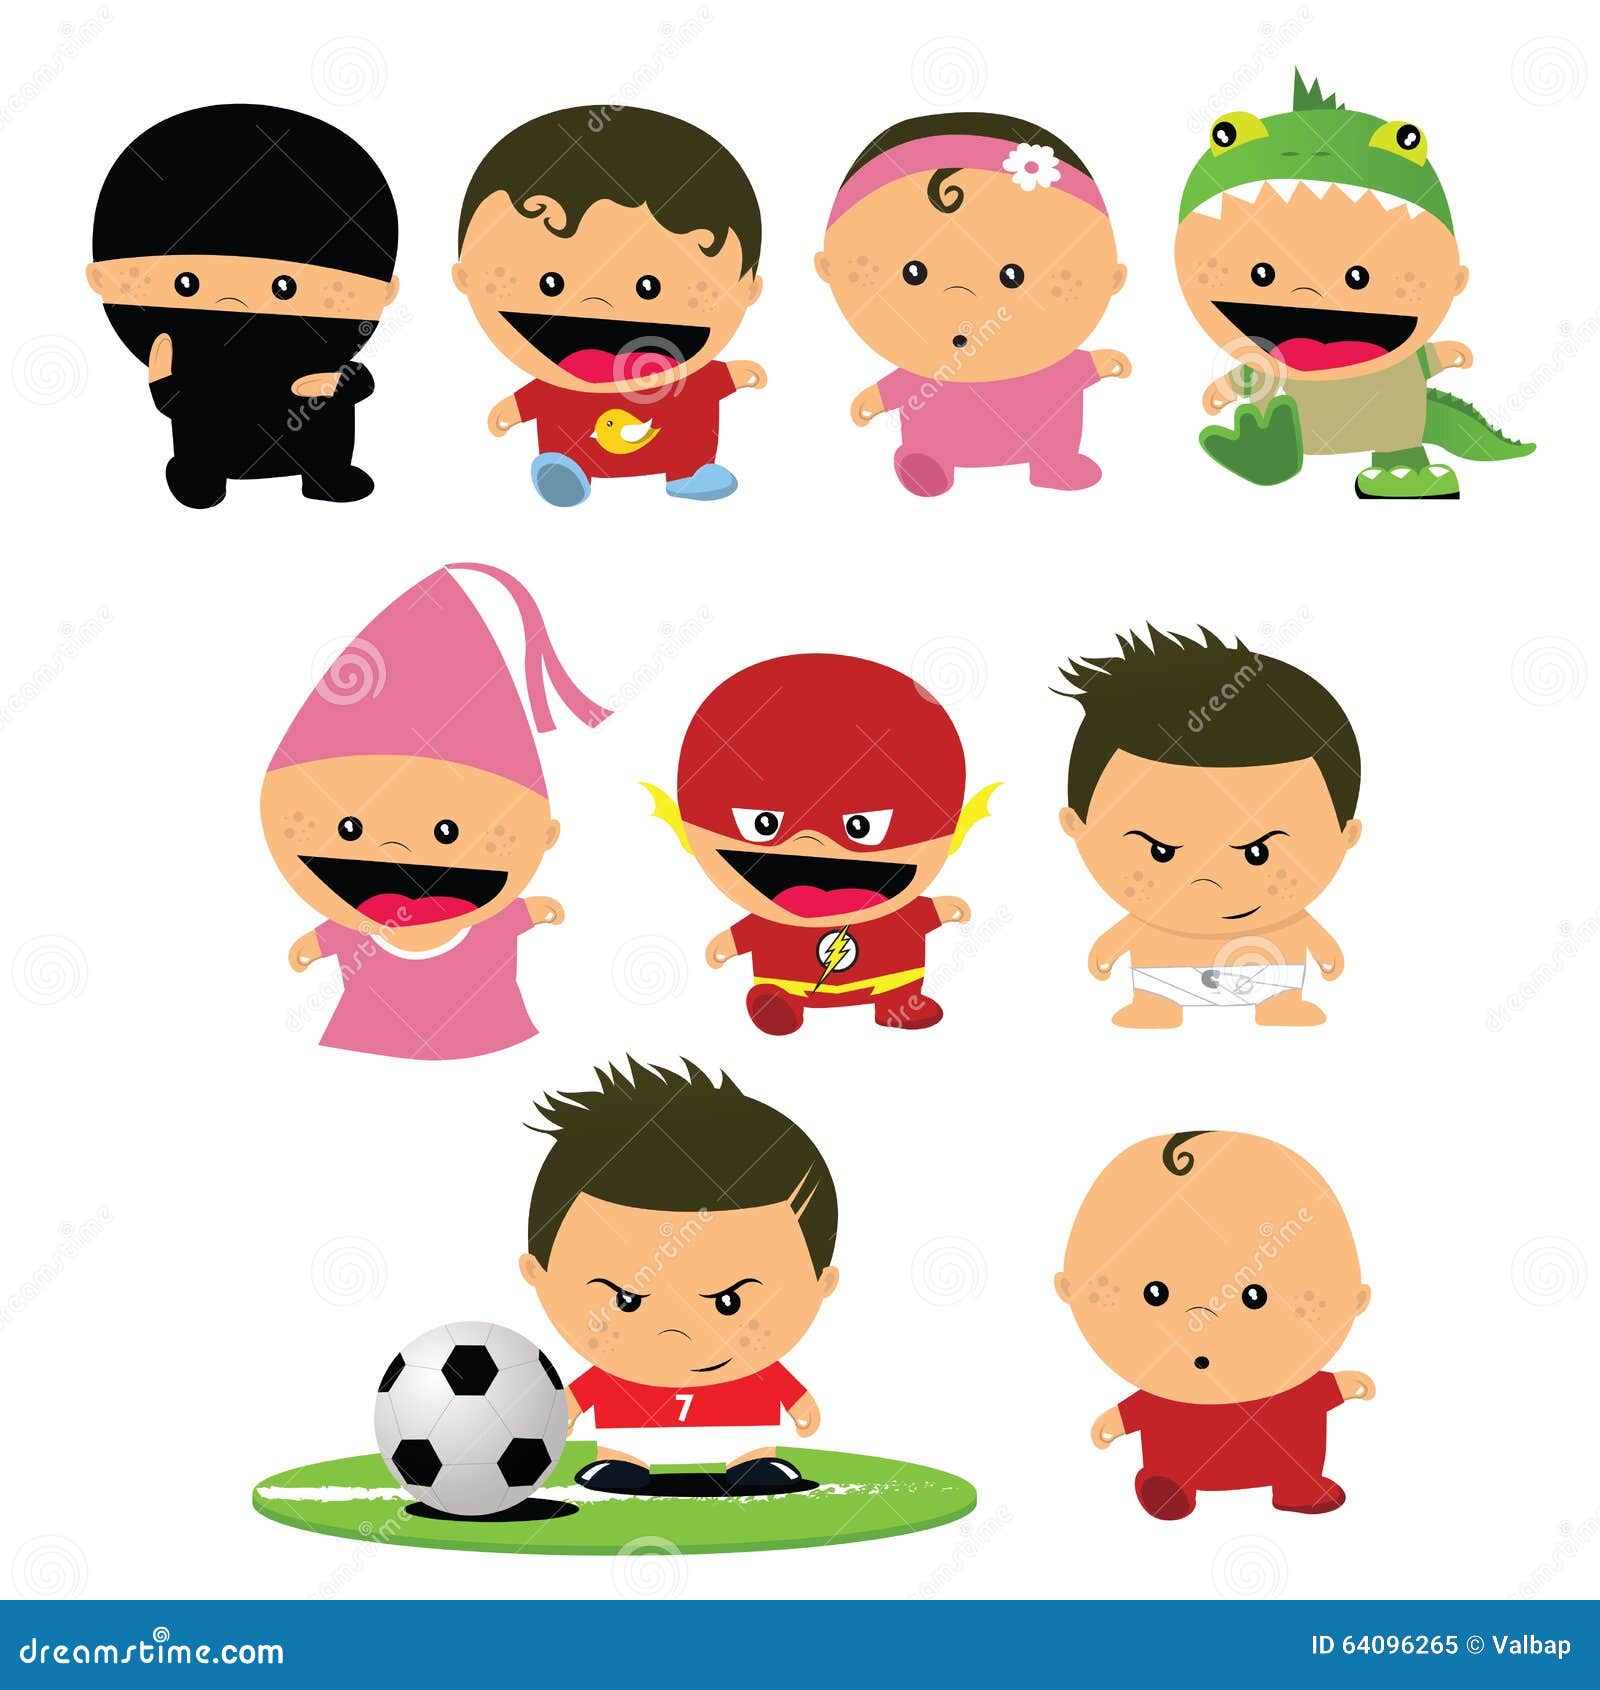 cartoon babies / kids / baby nursery fun playing masked